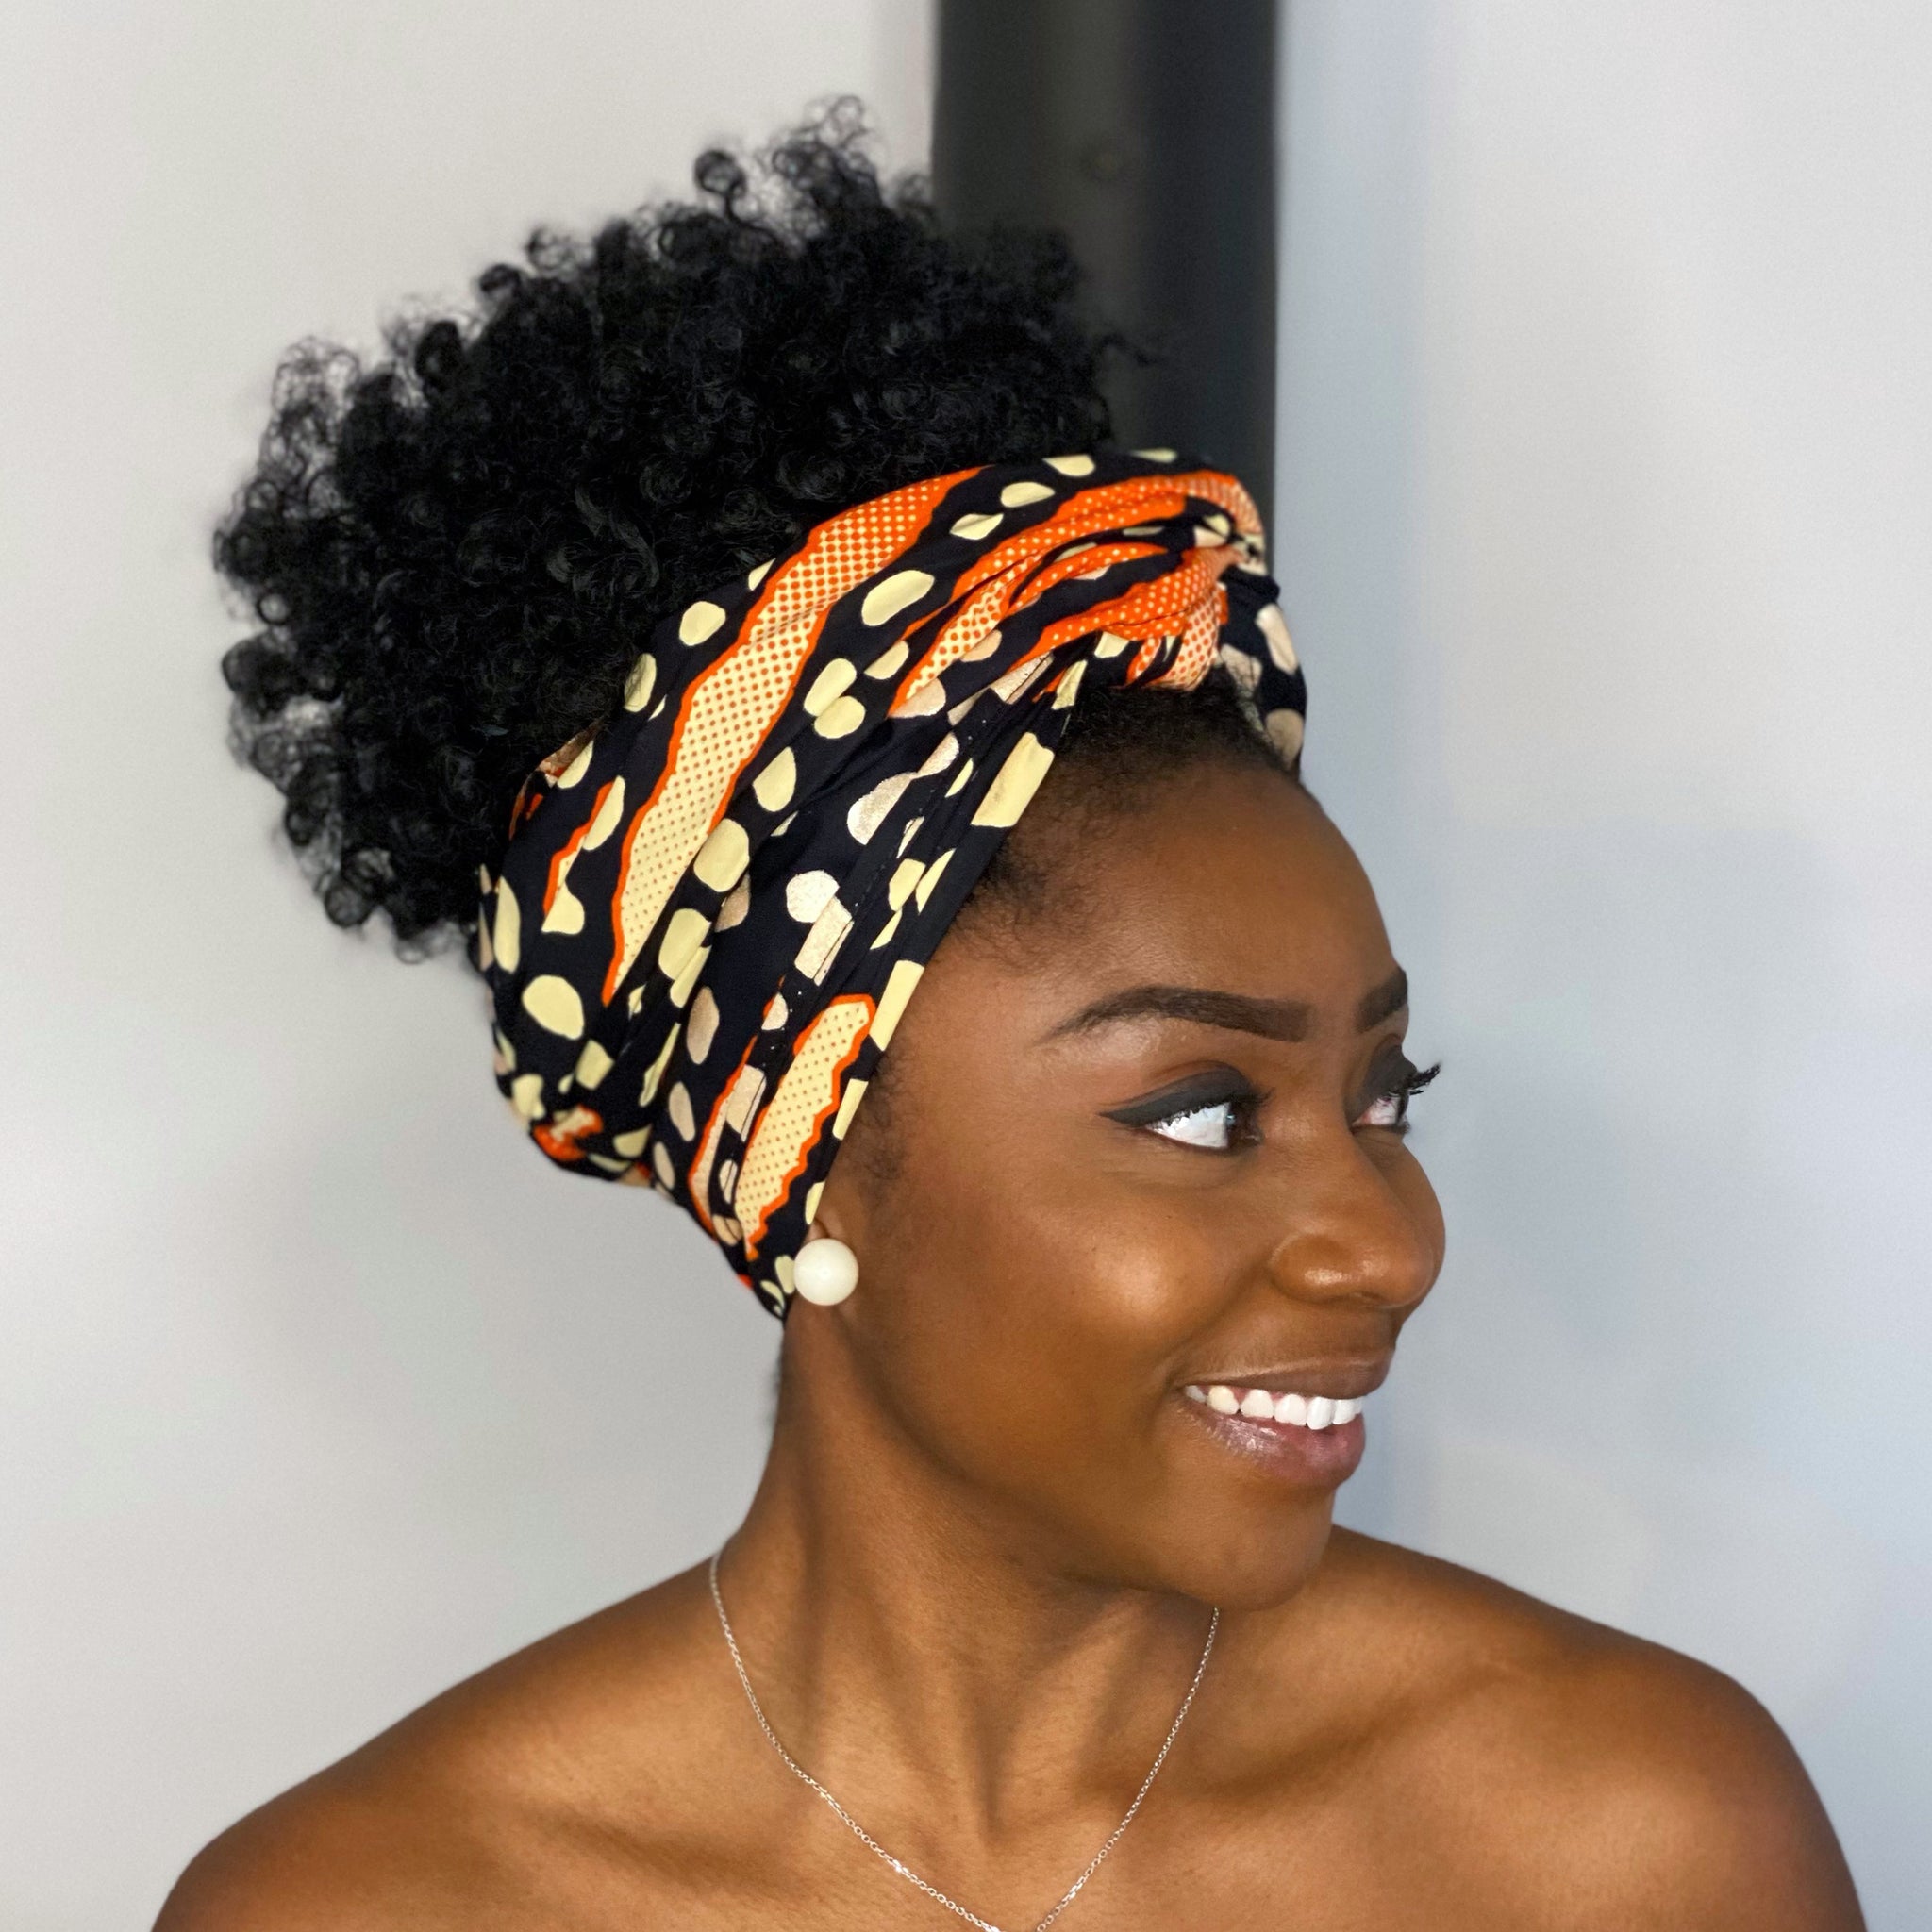 Afrikanisches Kopftuch / headwrap - Schwarz Orange metallic Bogolan